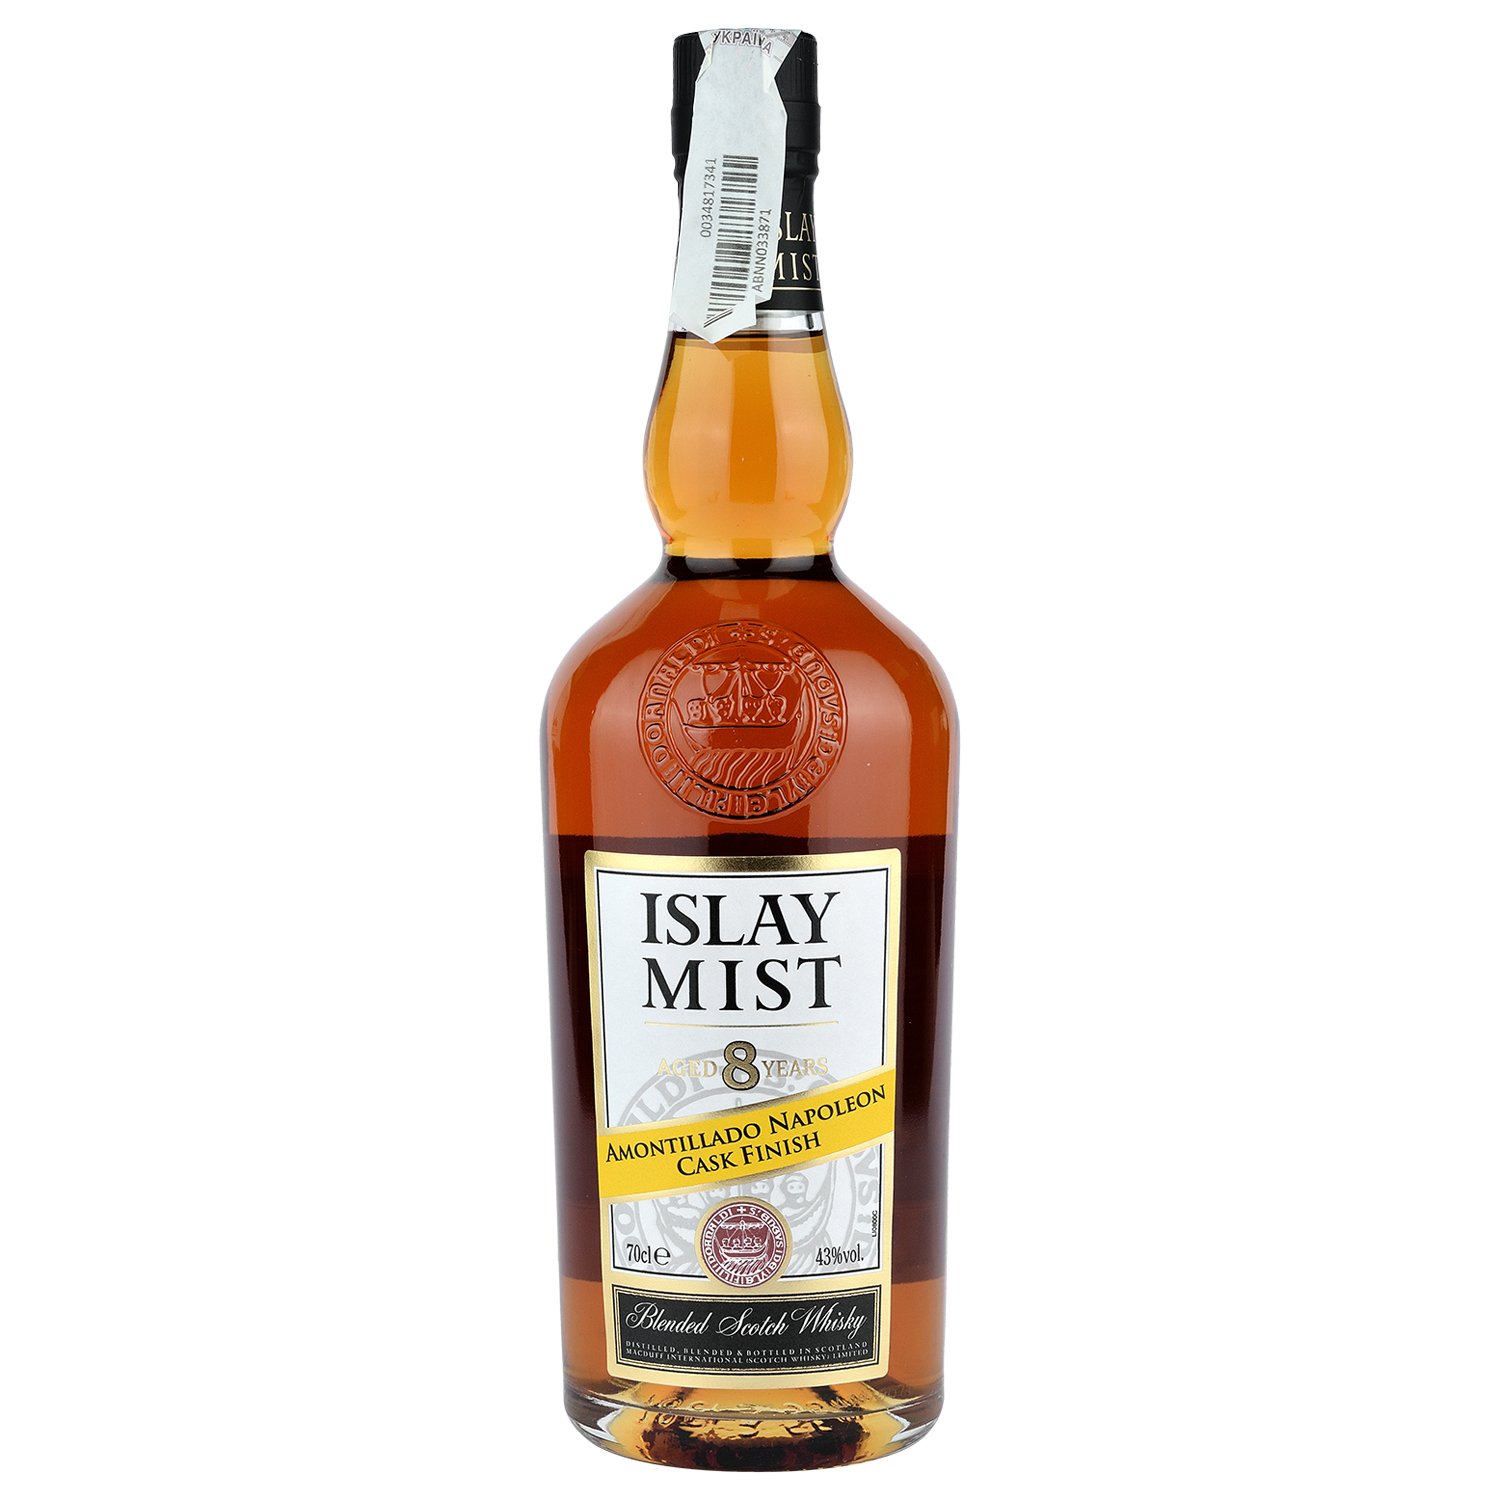 Віскі Islay Mist Amontillado Napoleon Cask Finish Blended Scotch Whisky 8 yo, 43%, 0,7 л - фото 3